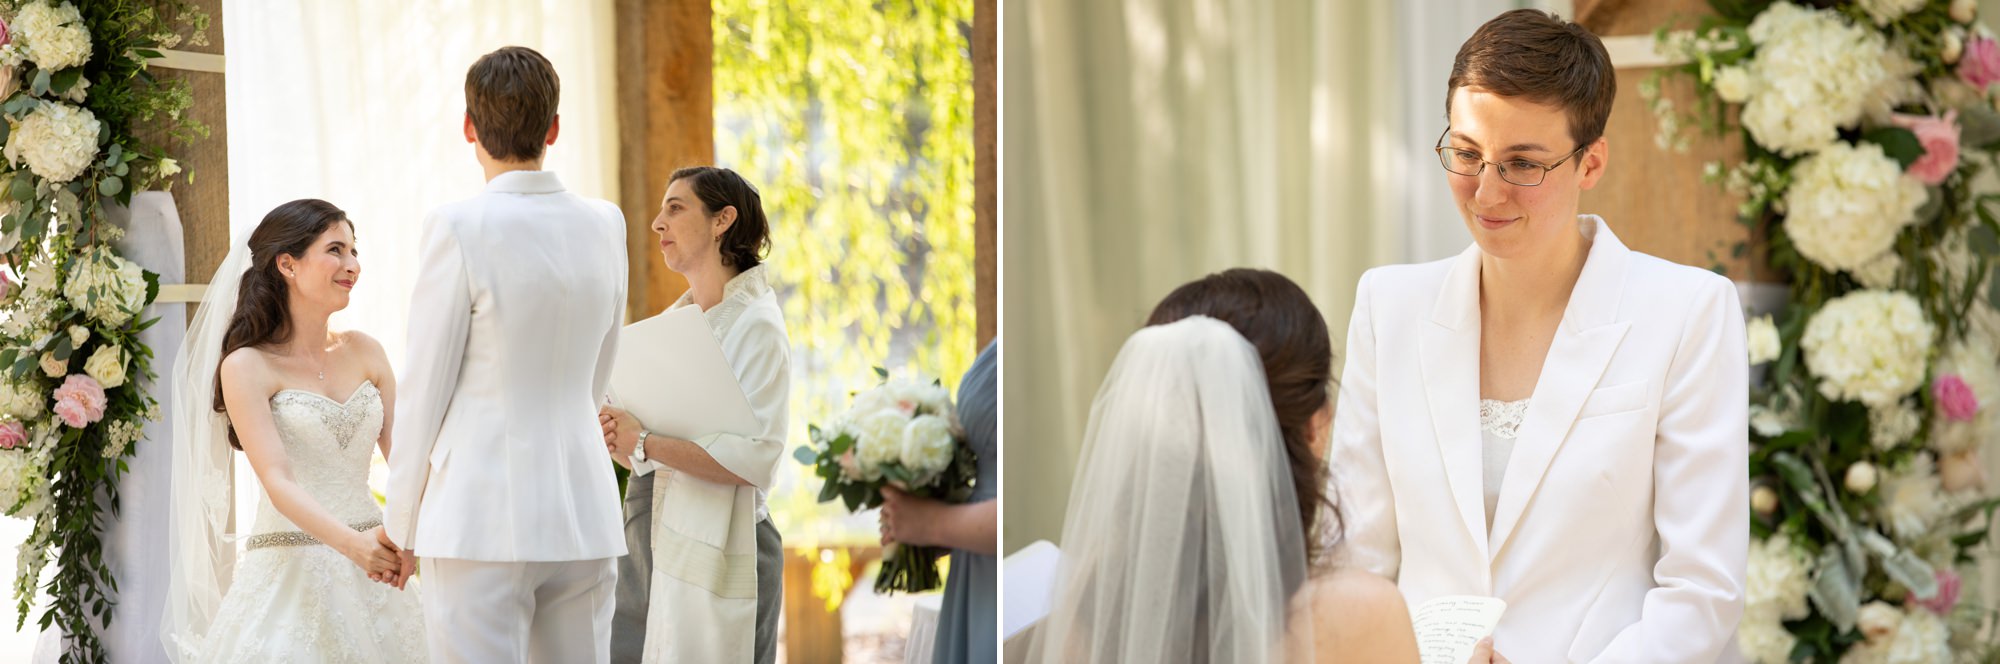 Top Jewish Wedding Photographers East Coast